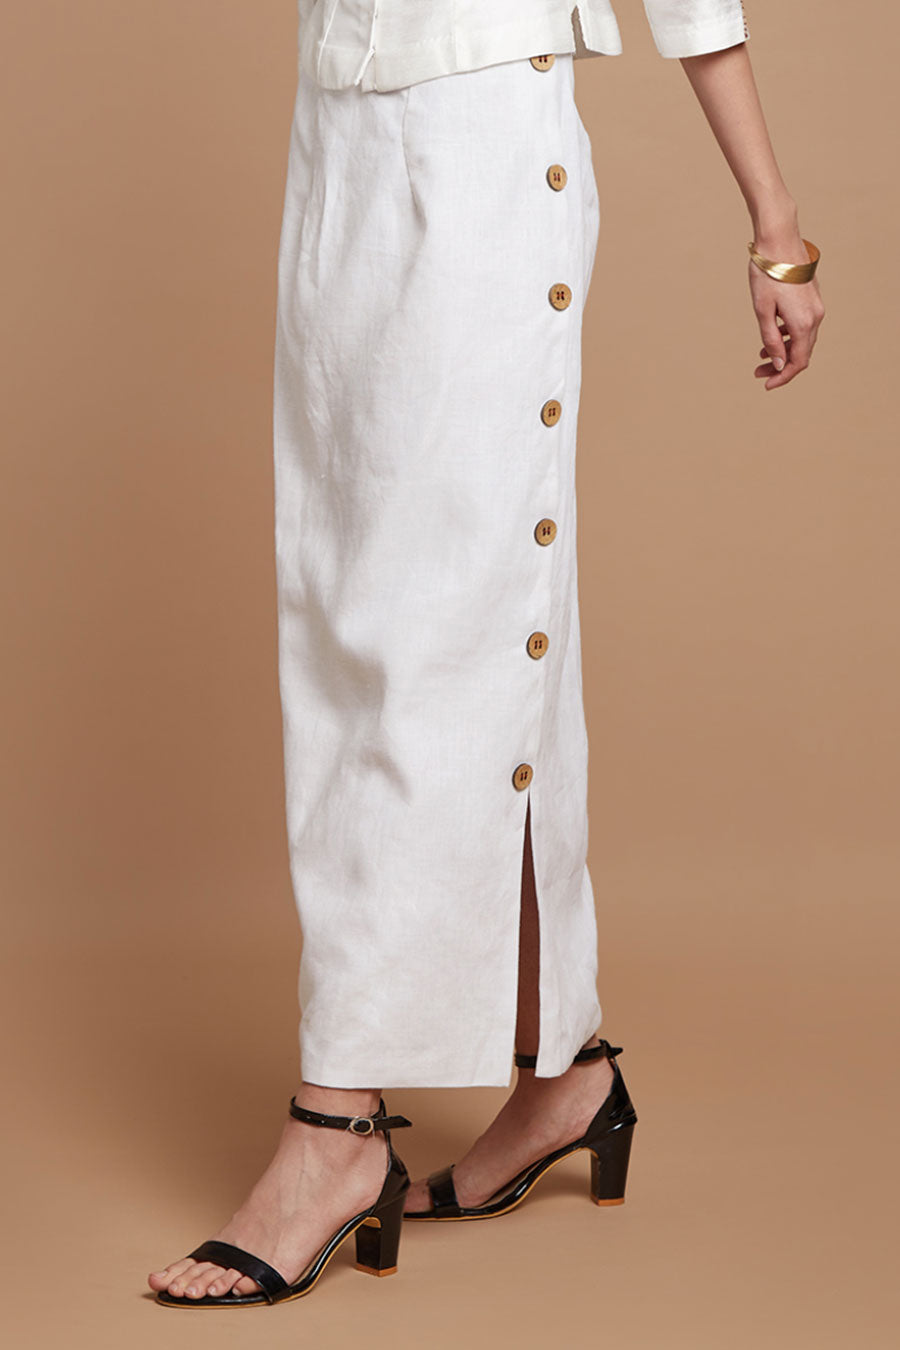 White Button-Down Skirt